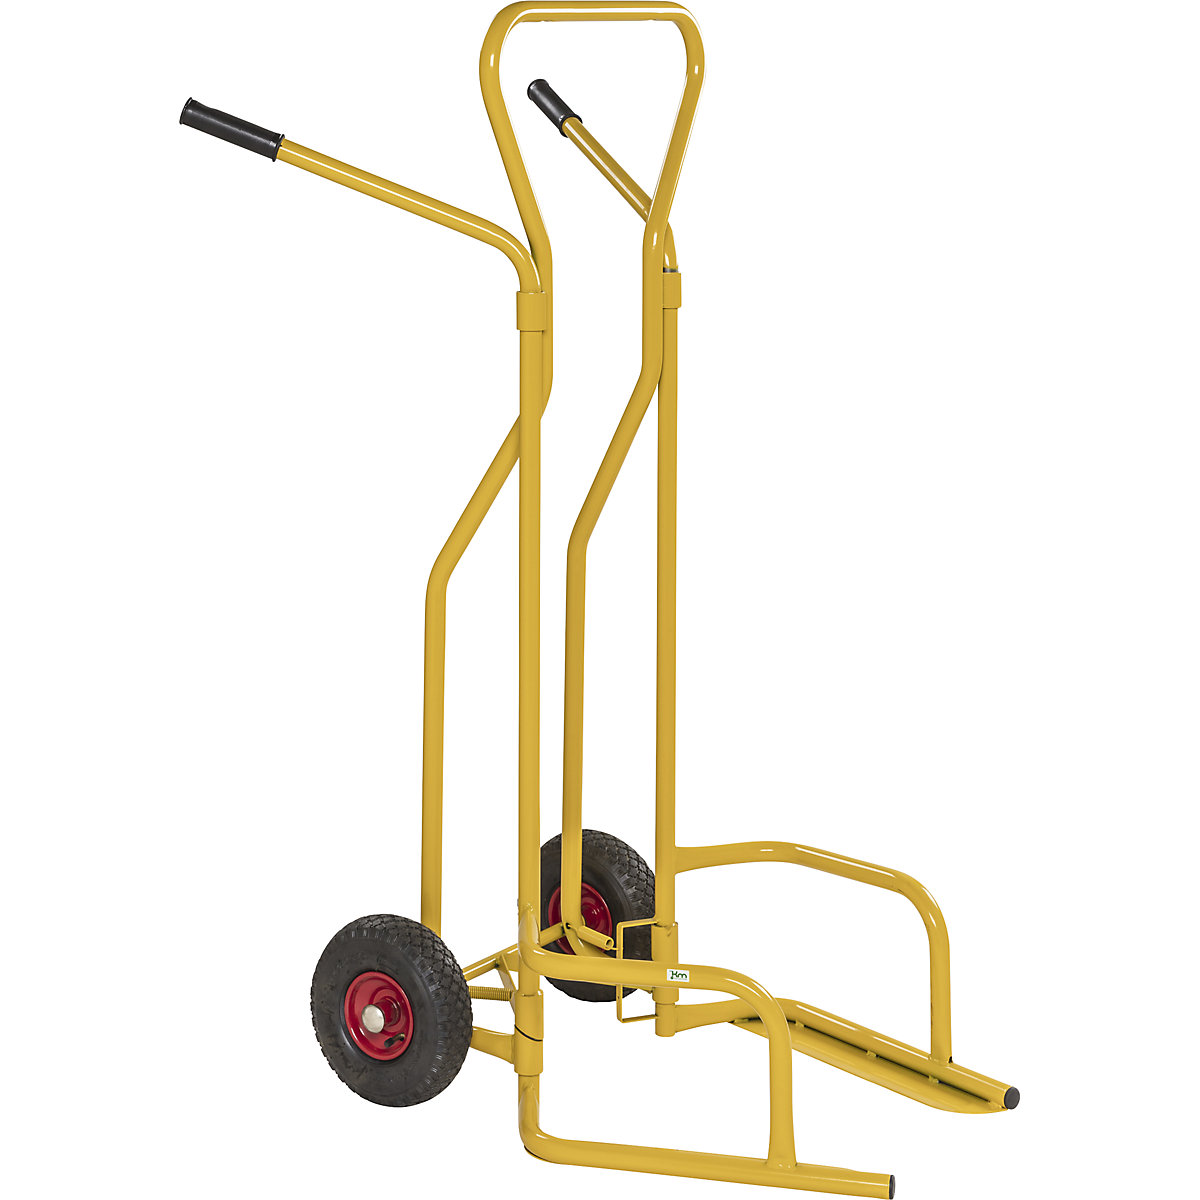 Carrello per pneumatici – Kongamek, portata 200 kg, giallo, a partire da 5 pz.-24